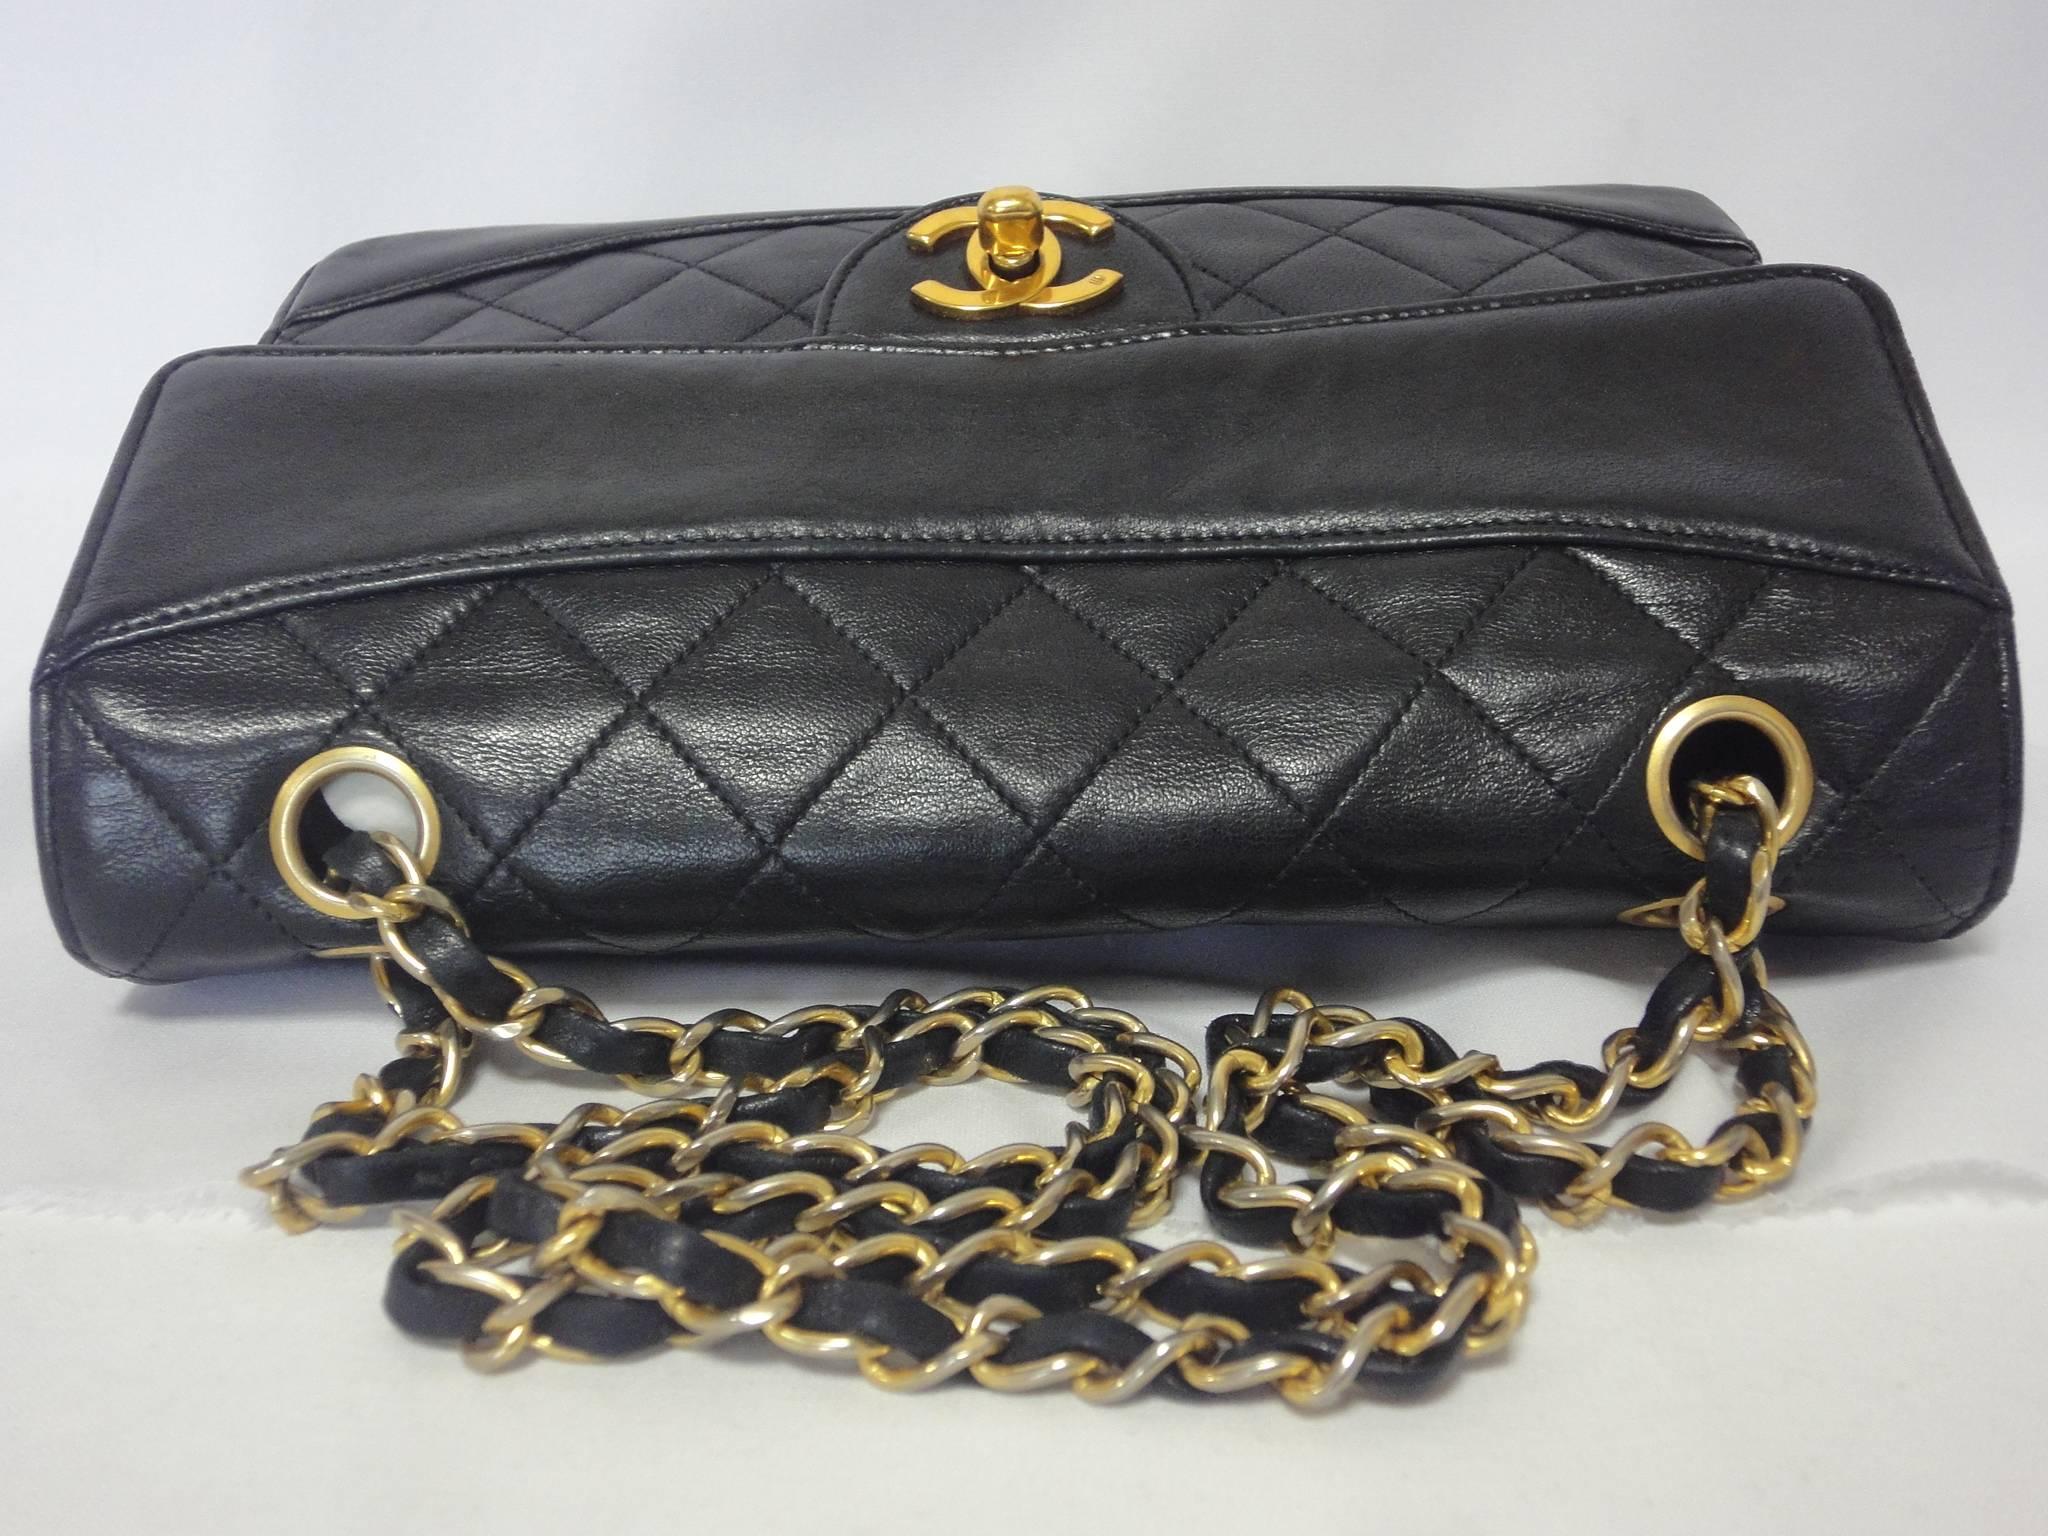 Vintage Chanel classic 2.55 black lambskin shoulder bag with golden chain straps 1